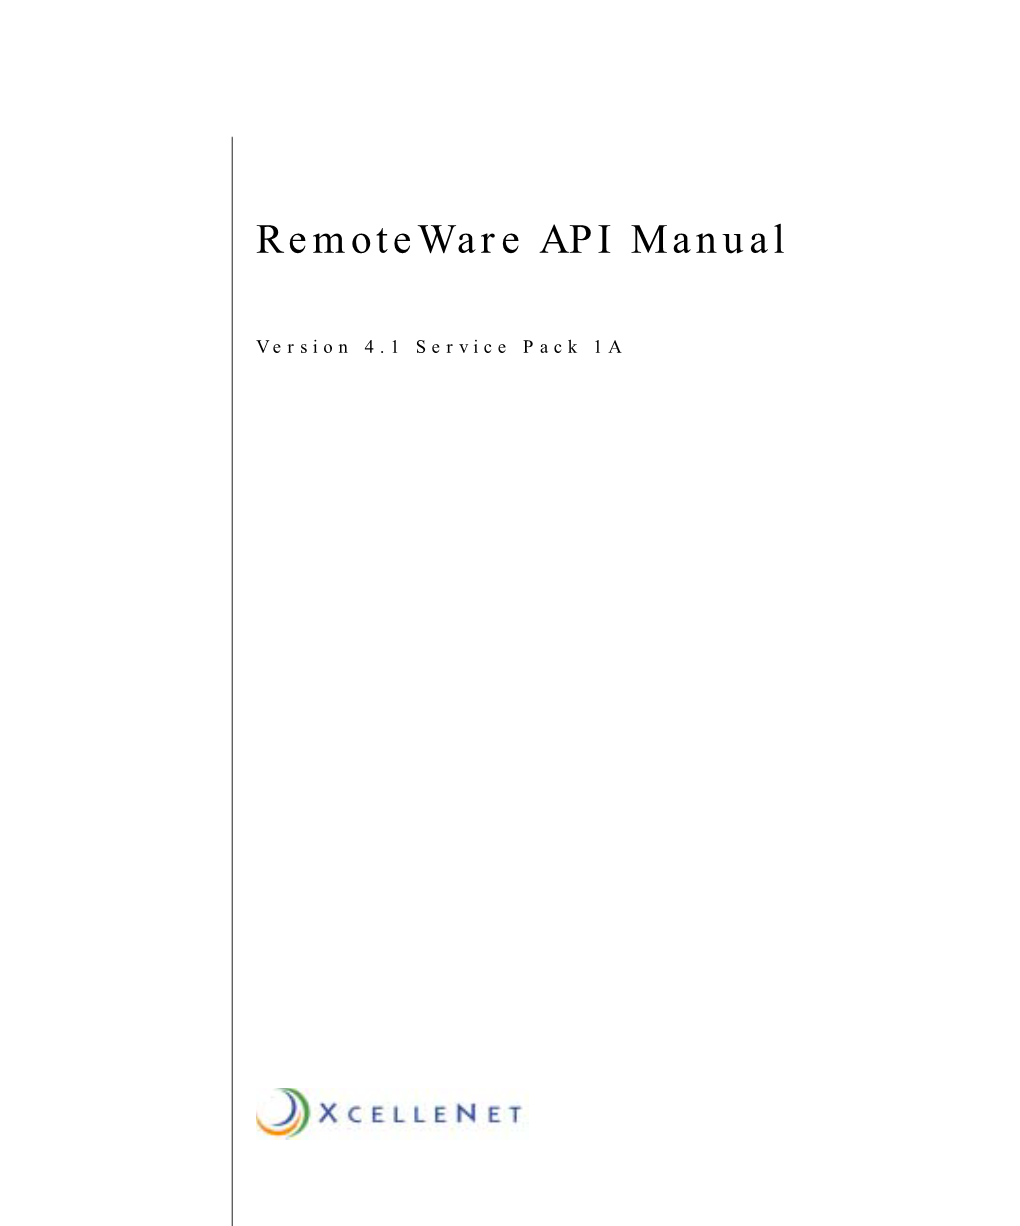 Remoteware API Manual